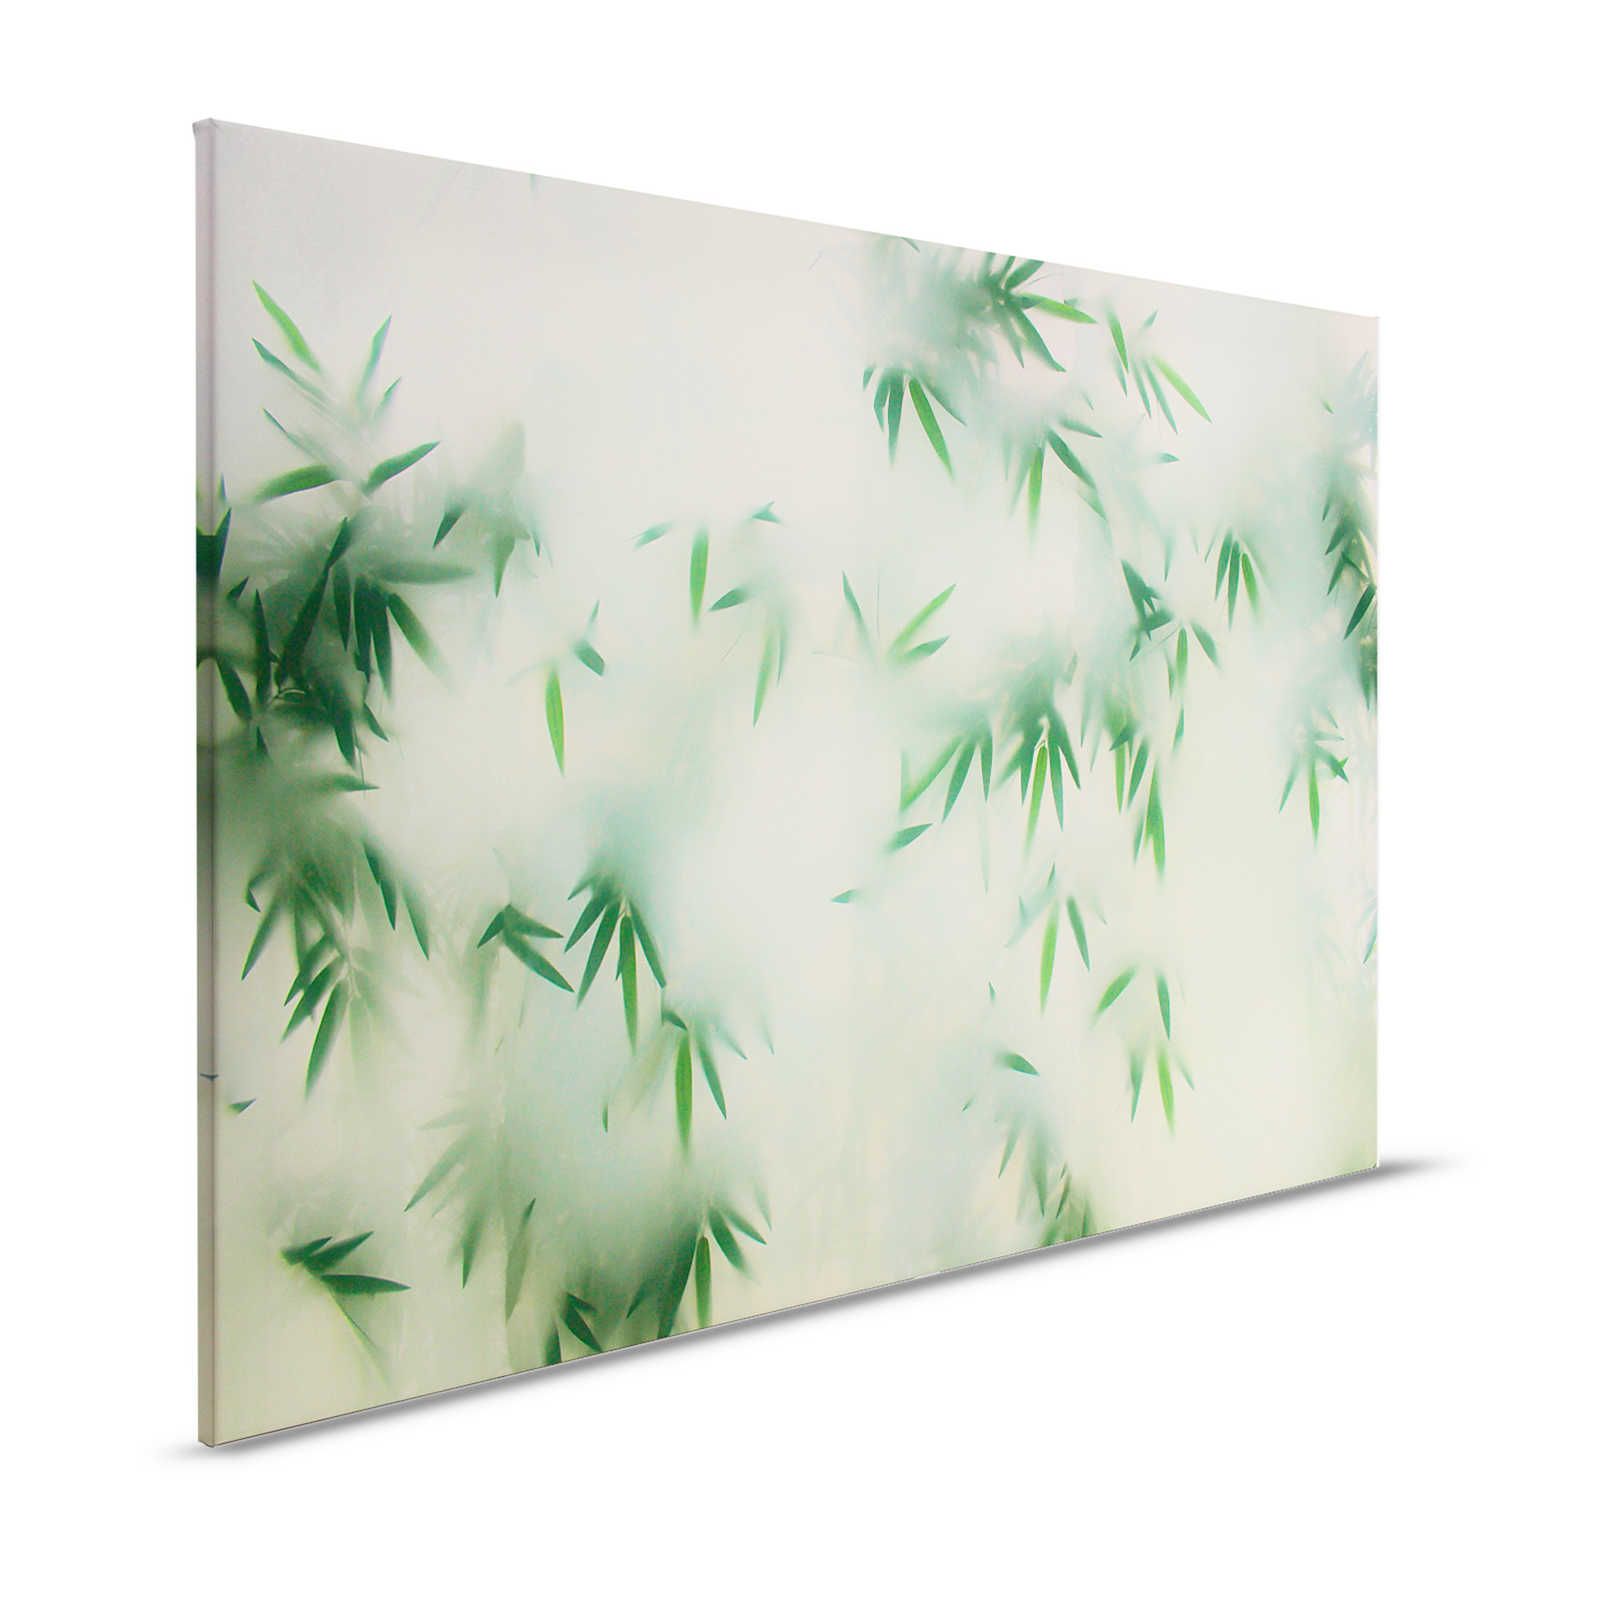 Panda Paradise 2 - Tela dipinta con bambù verde nella nebbia - 1,20 m x 0,80 m
